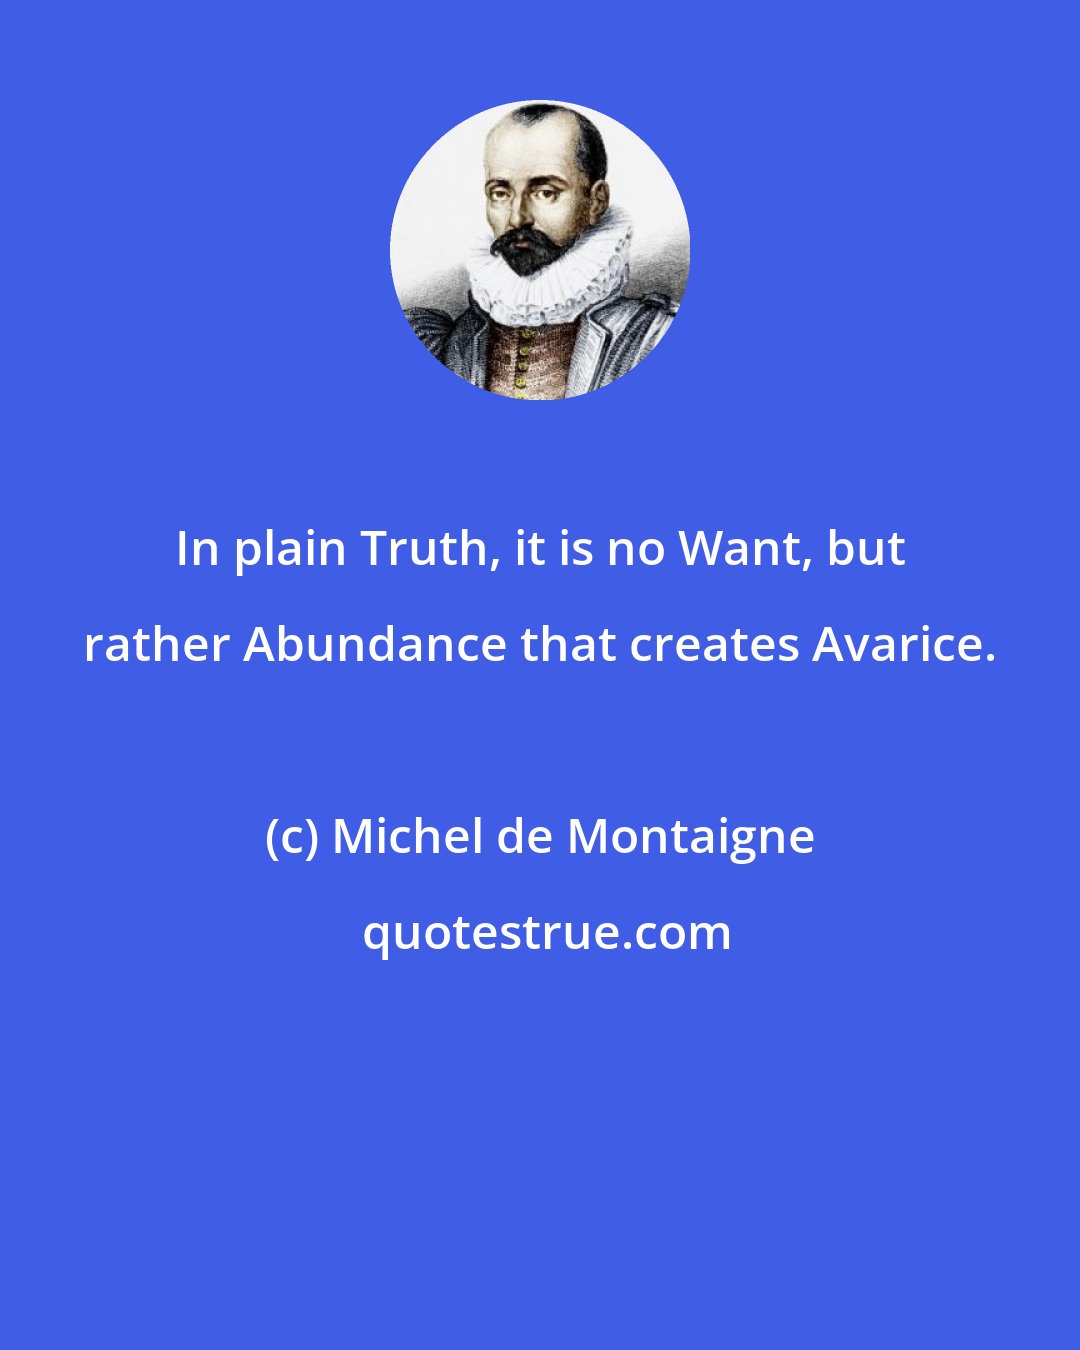 Michel de Montaigne: In plain Truth, it is no Want, but rather Abundance that creates Avarice.